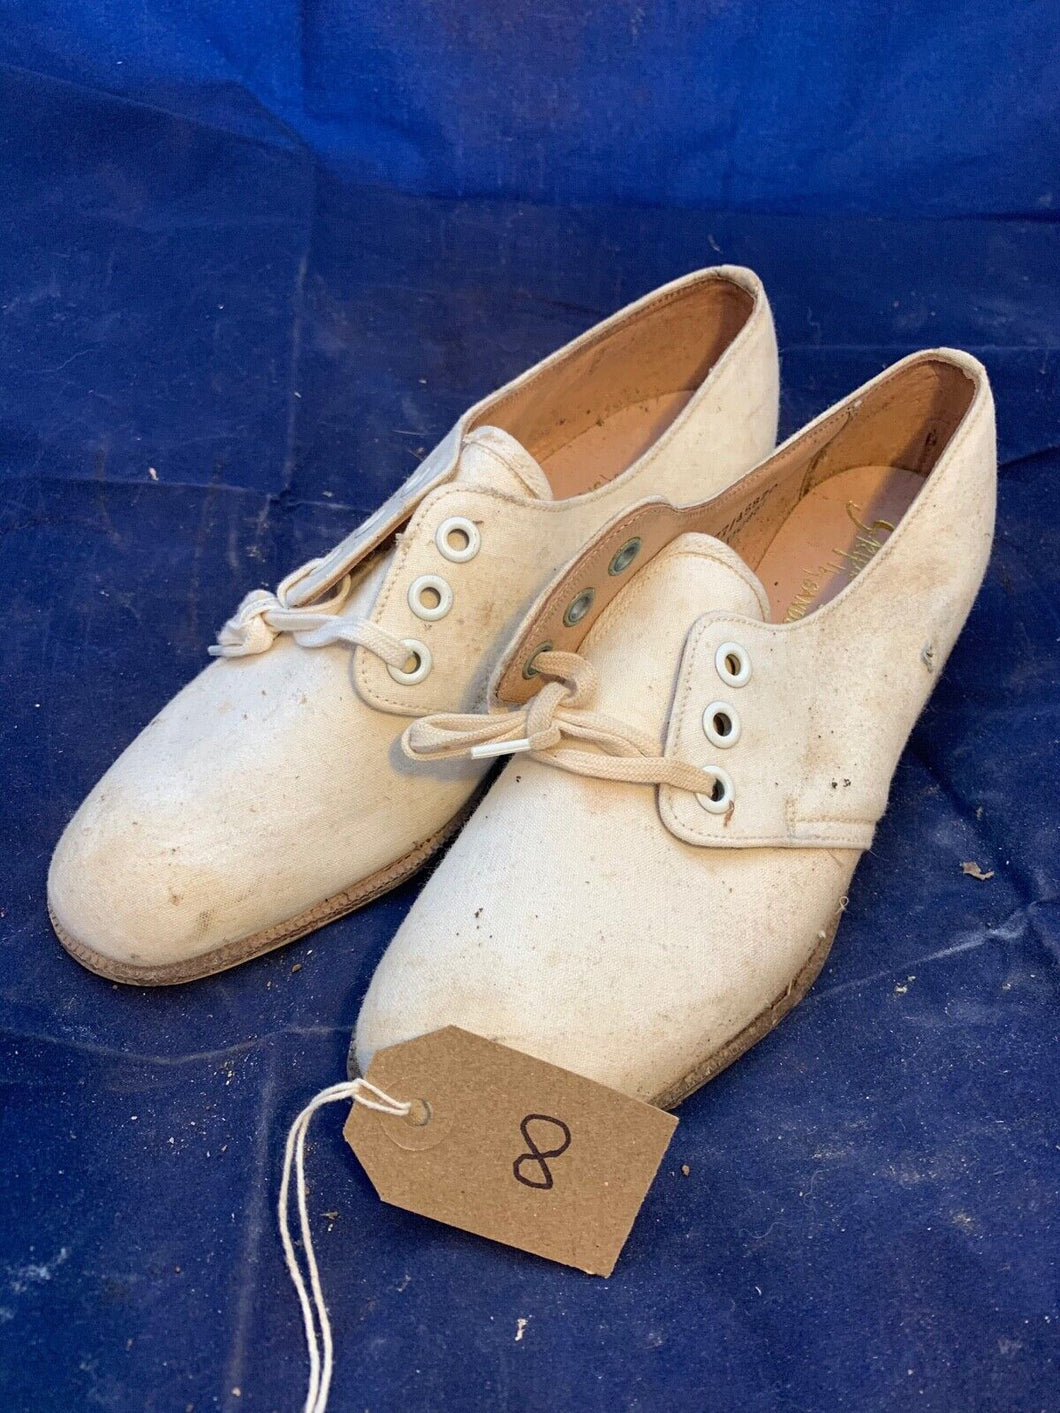 Original WW2 British Army Women's White Summer Shoes - ATS WAAF - Size 225s #8